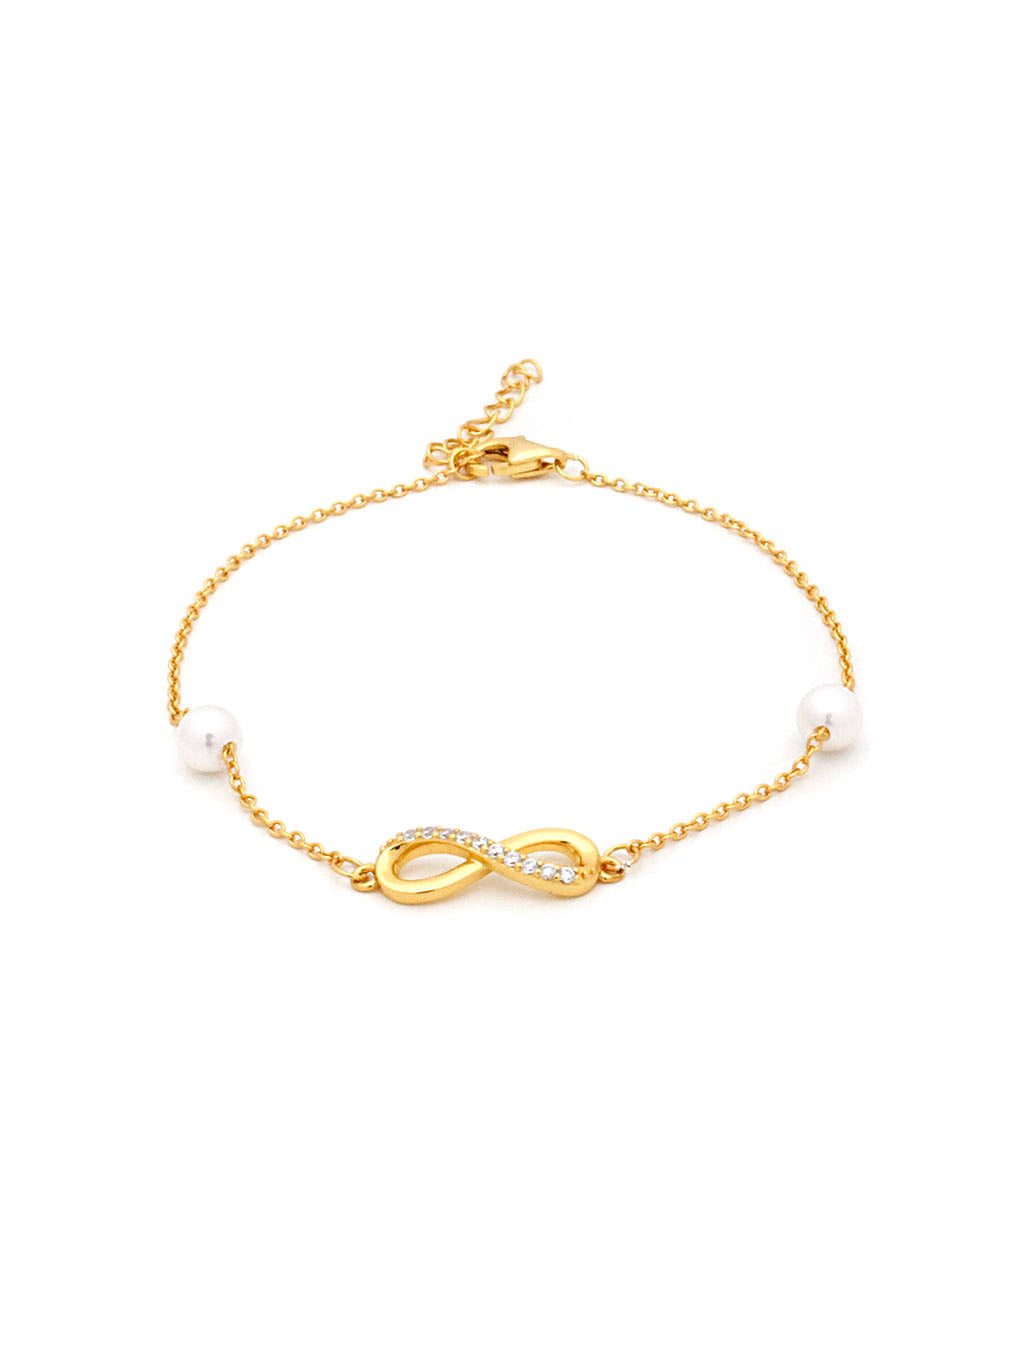 Infinite bracelet with pearls